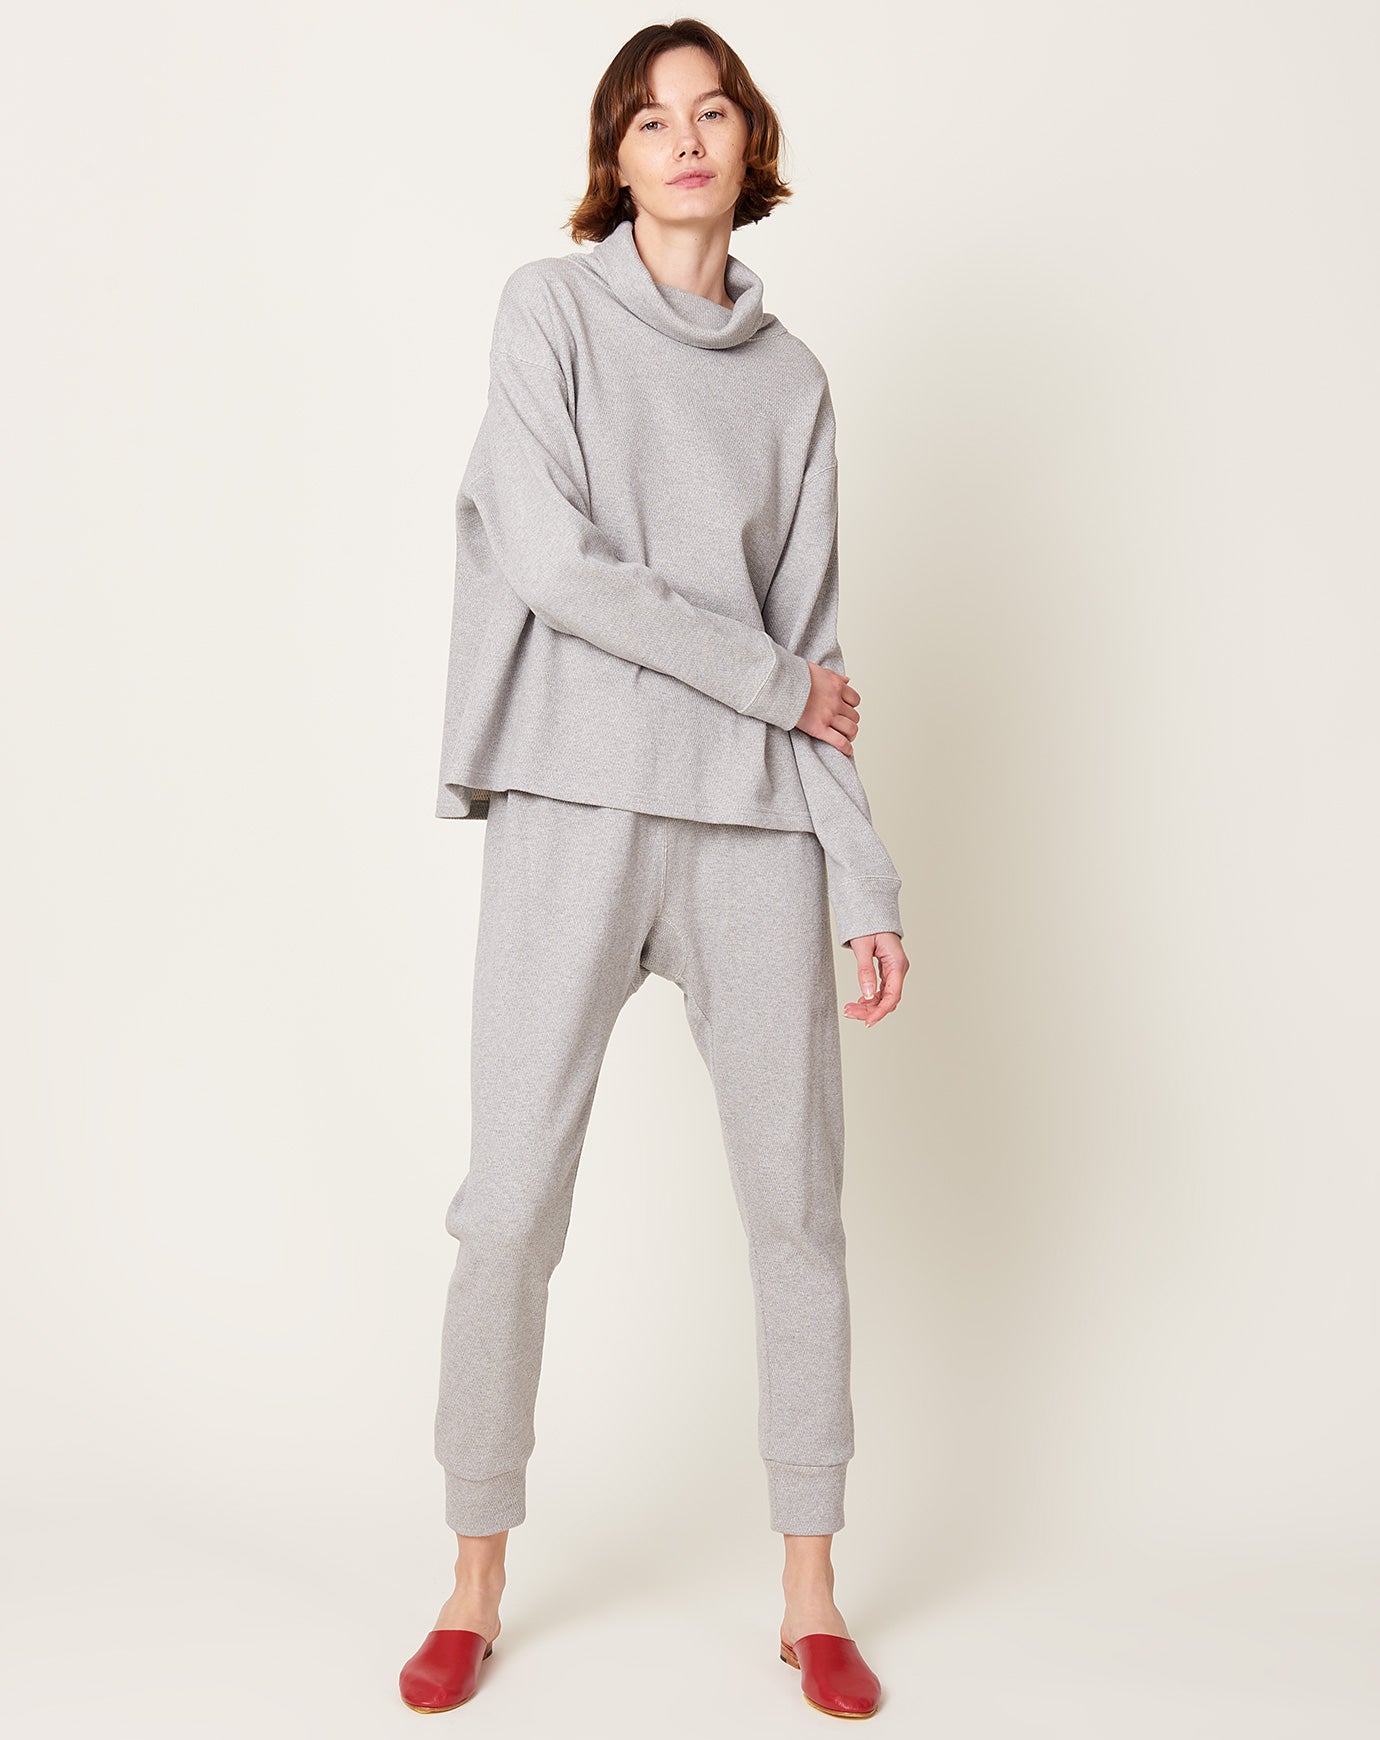 Ichi Knit Turtleneck in Grey